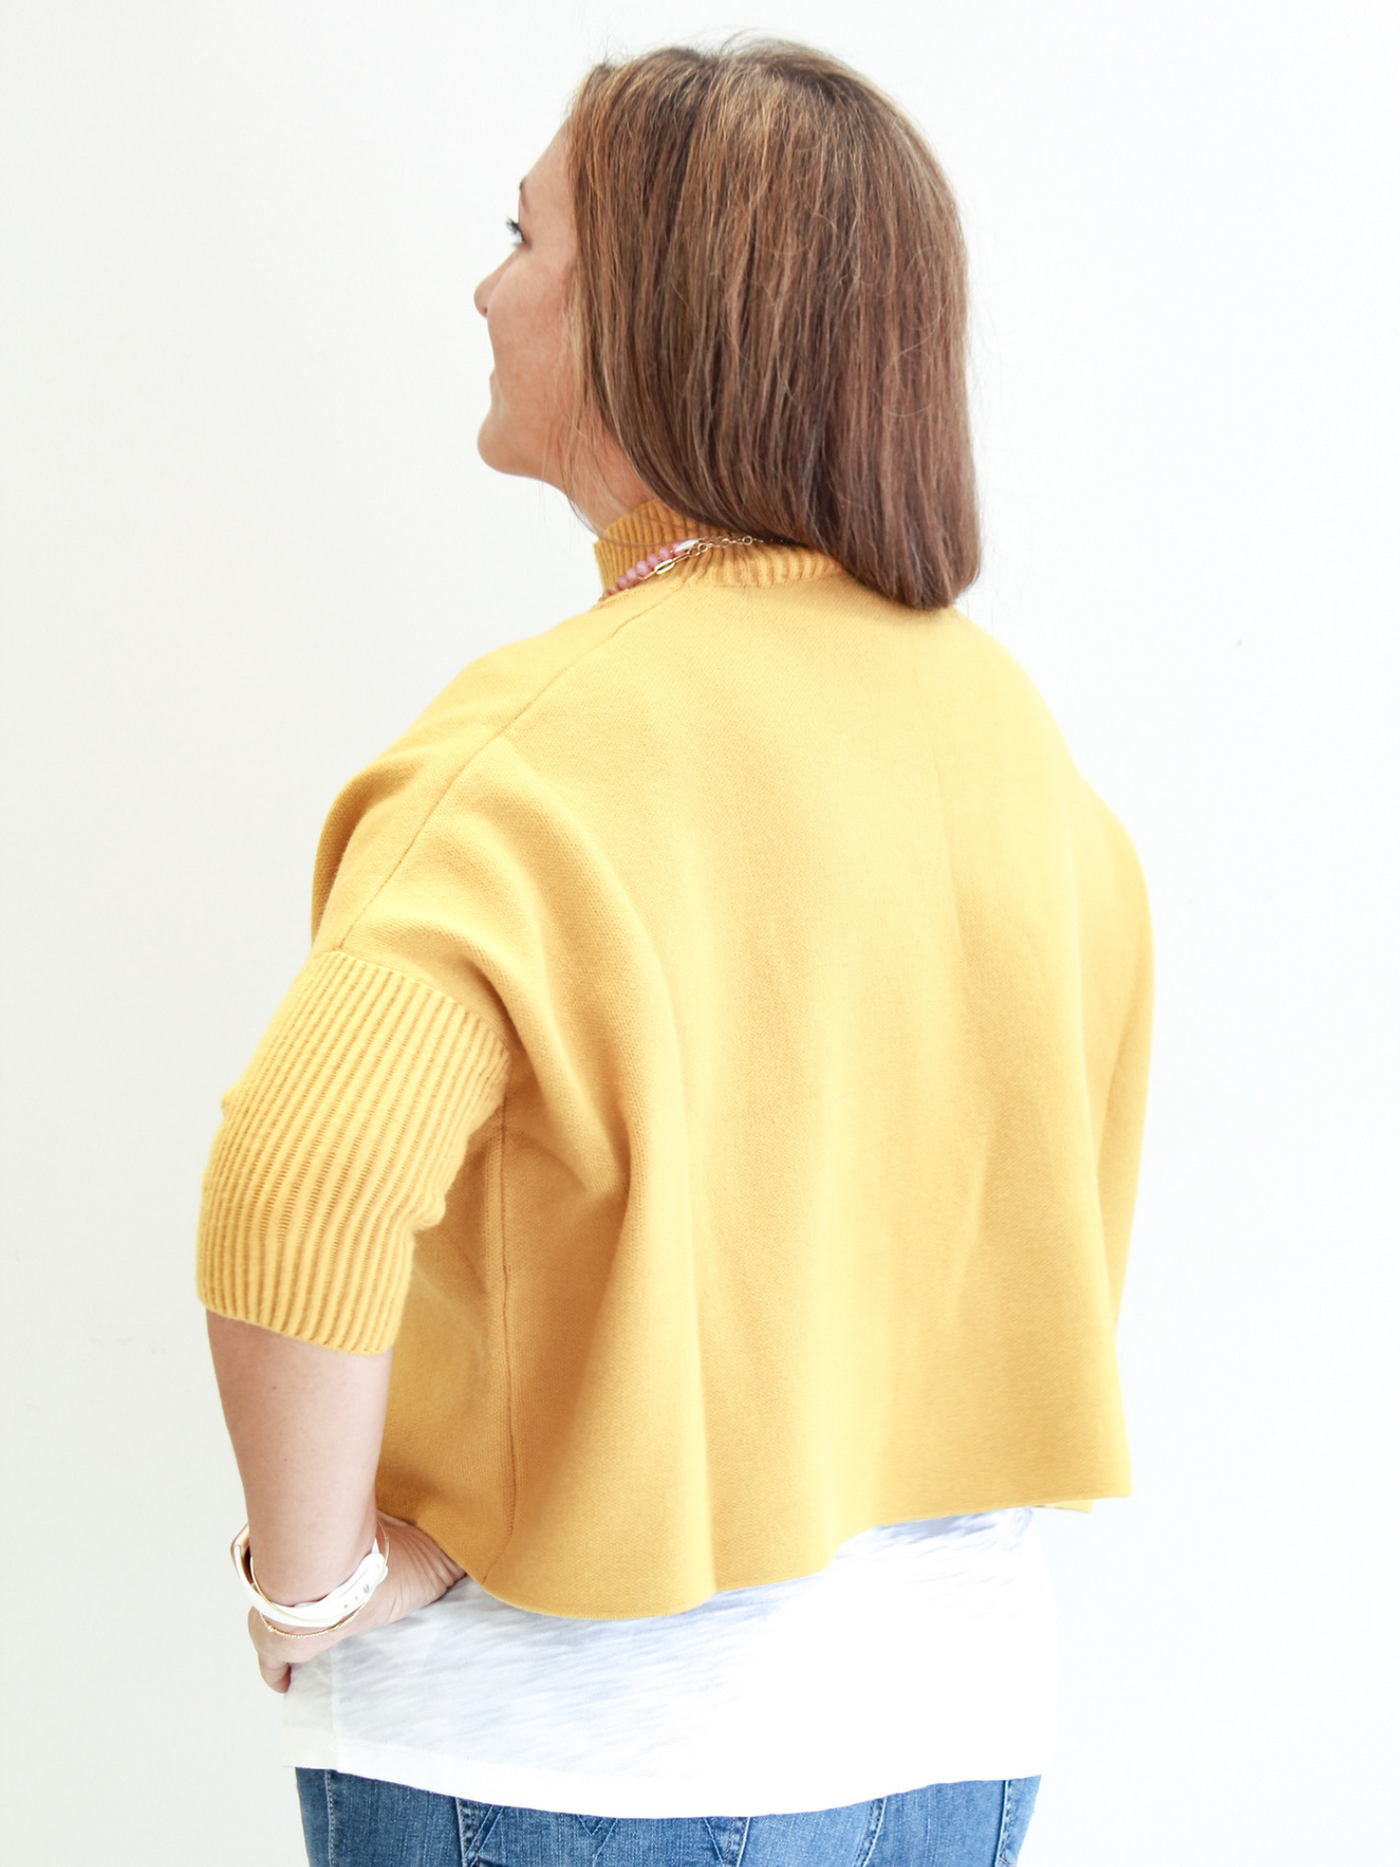 Mustard Aja 3/4 Sleeve Sweater back view.